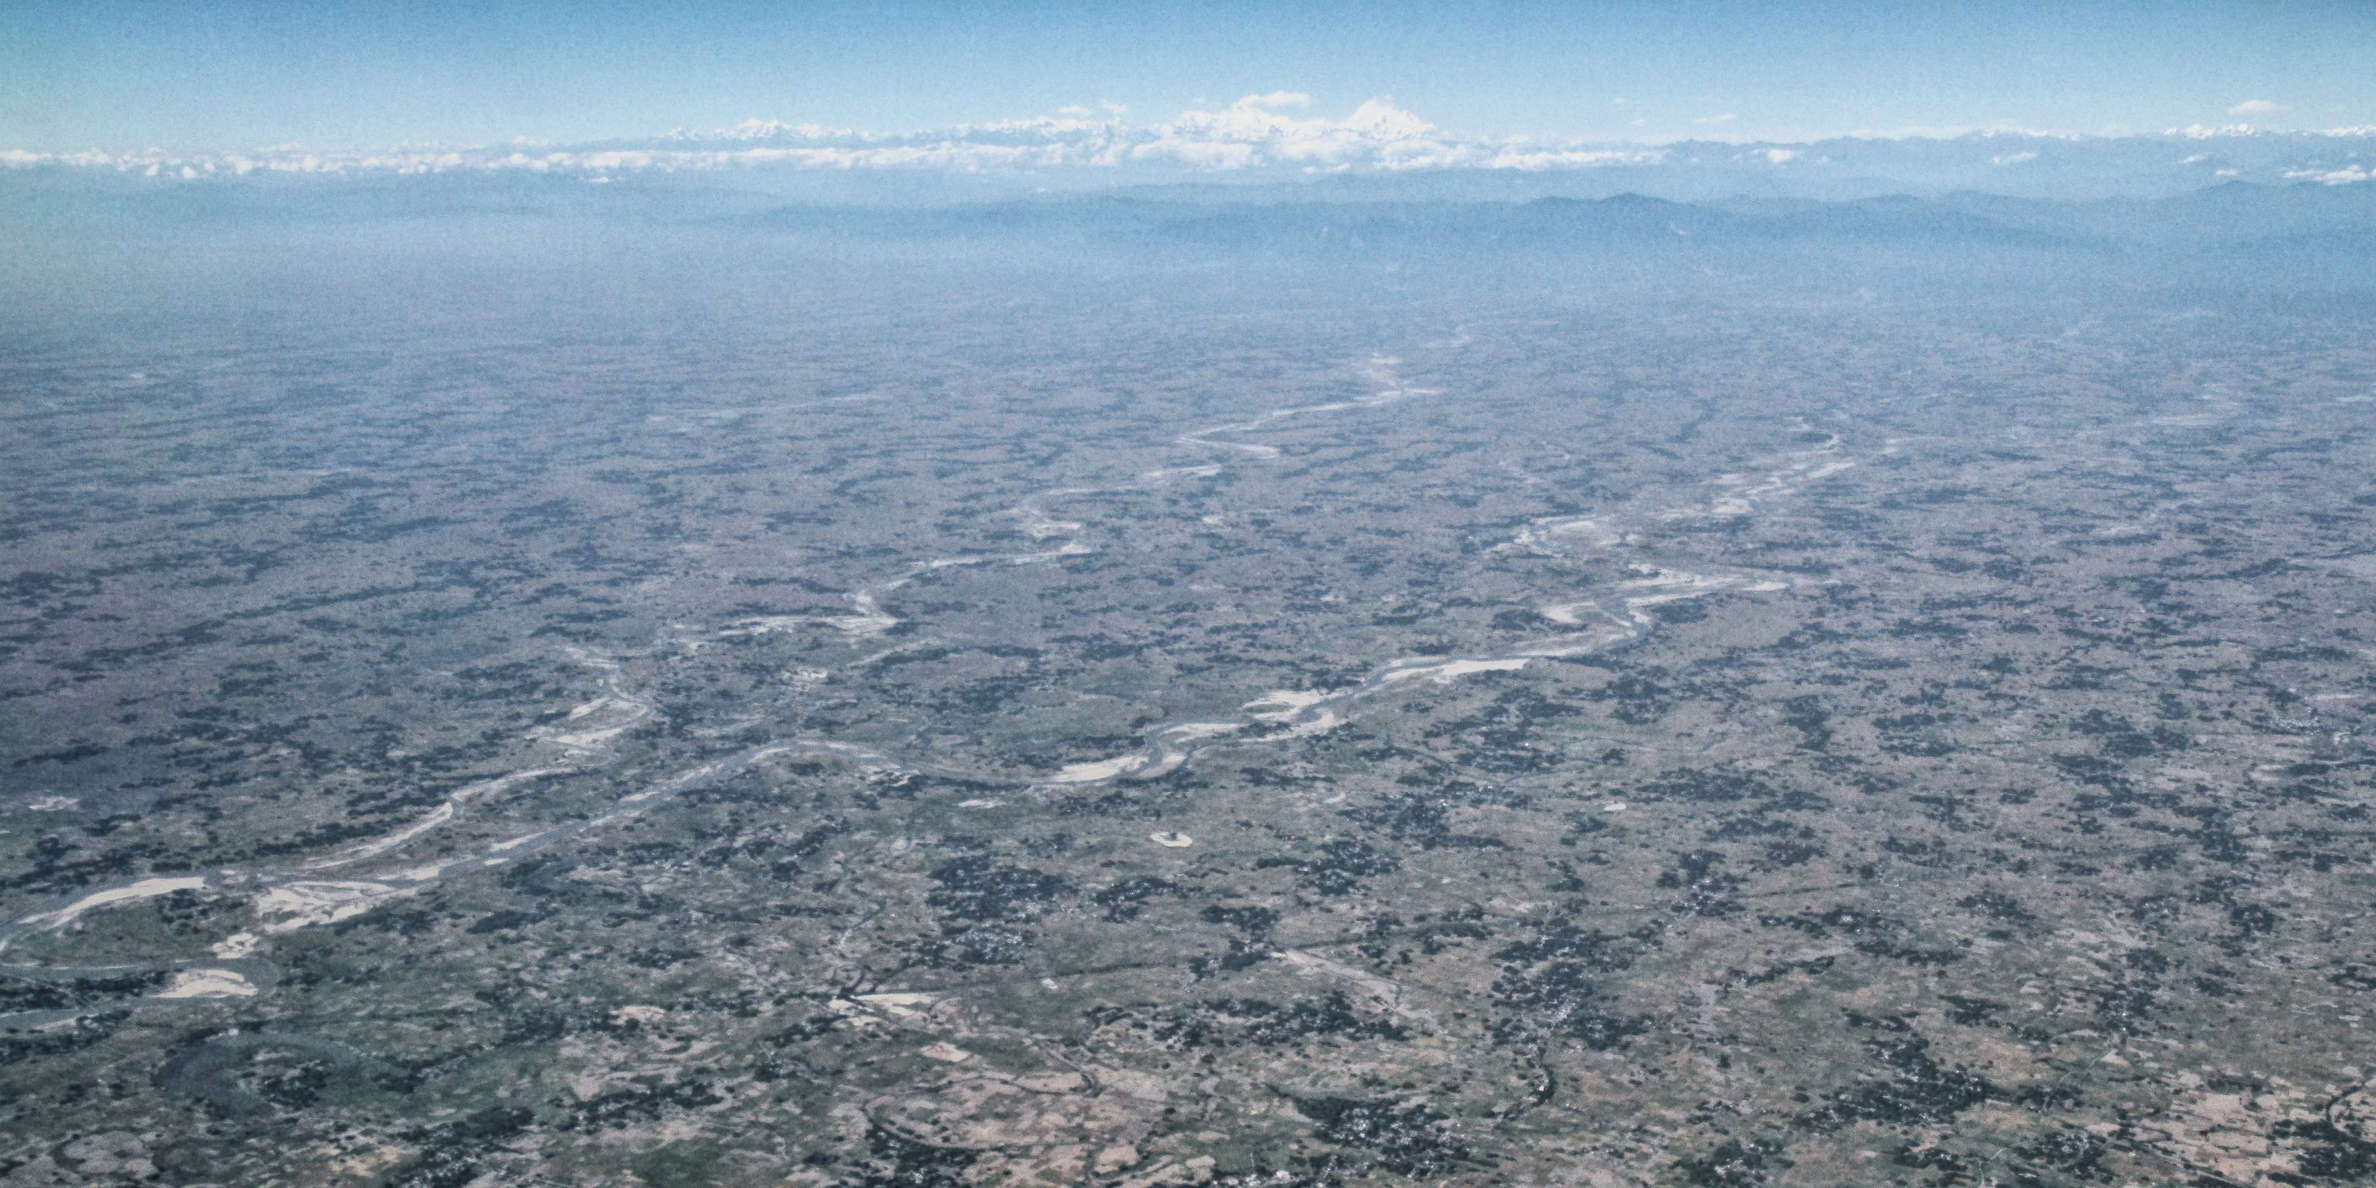 Indo-Gangetic Plain and Himalaya